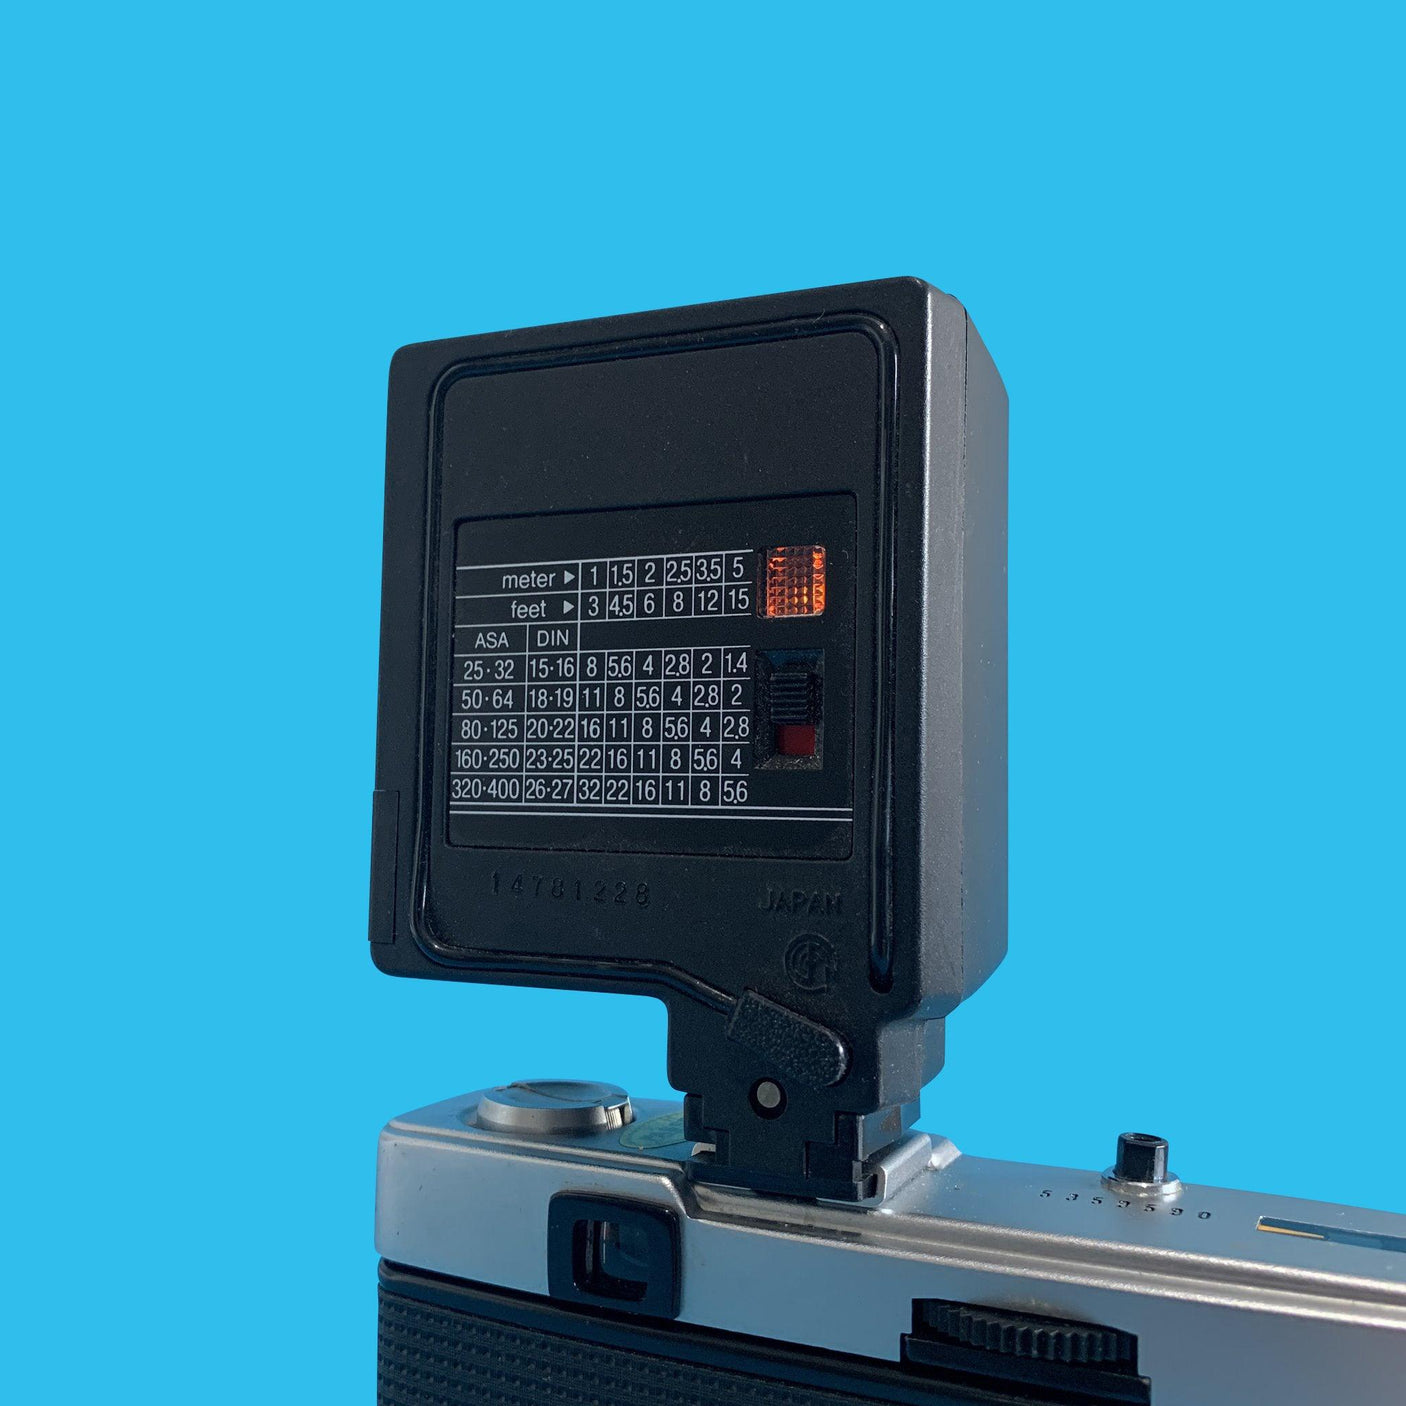 Speedtron 3H External Flash Unit for 35mm Film Camera